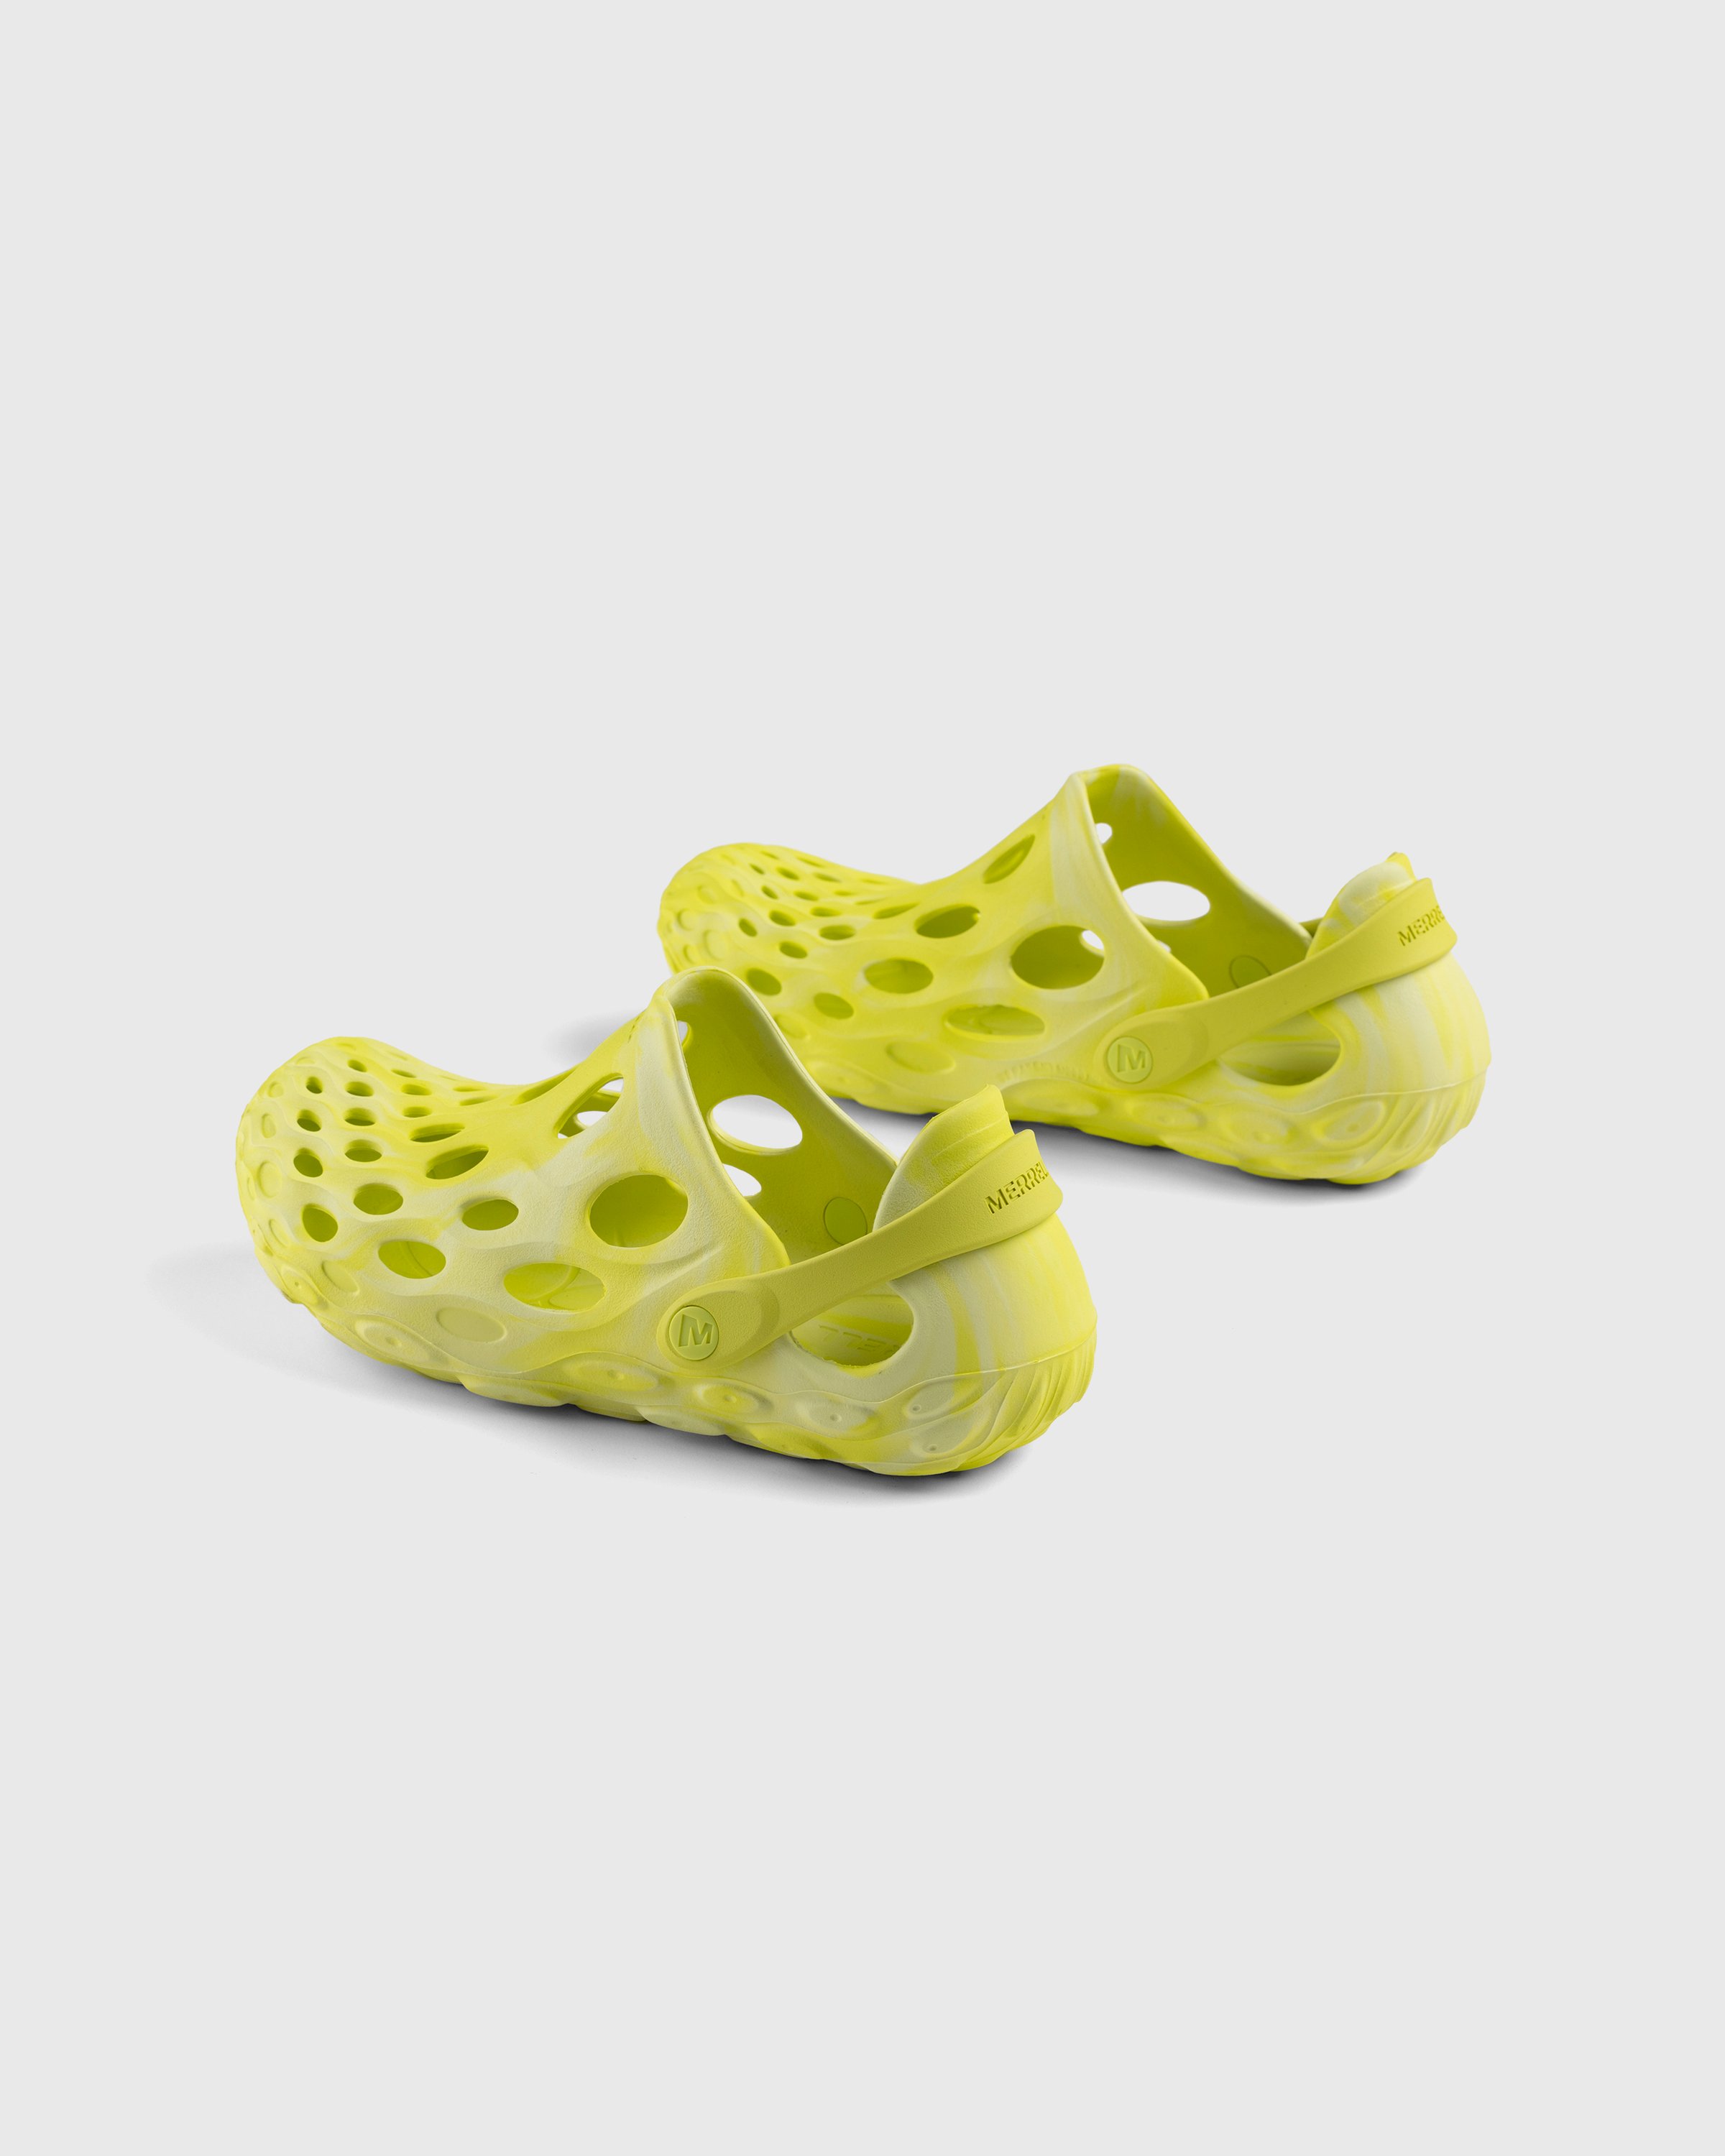 Merrell - Hydro Moc Pomelo - Footwear - Yellow - Image 5